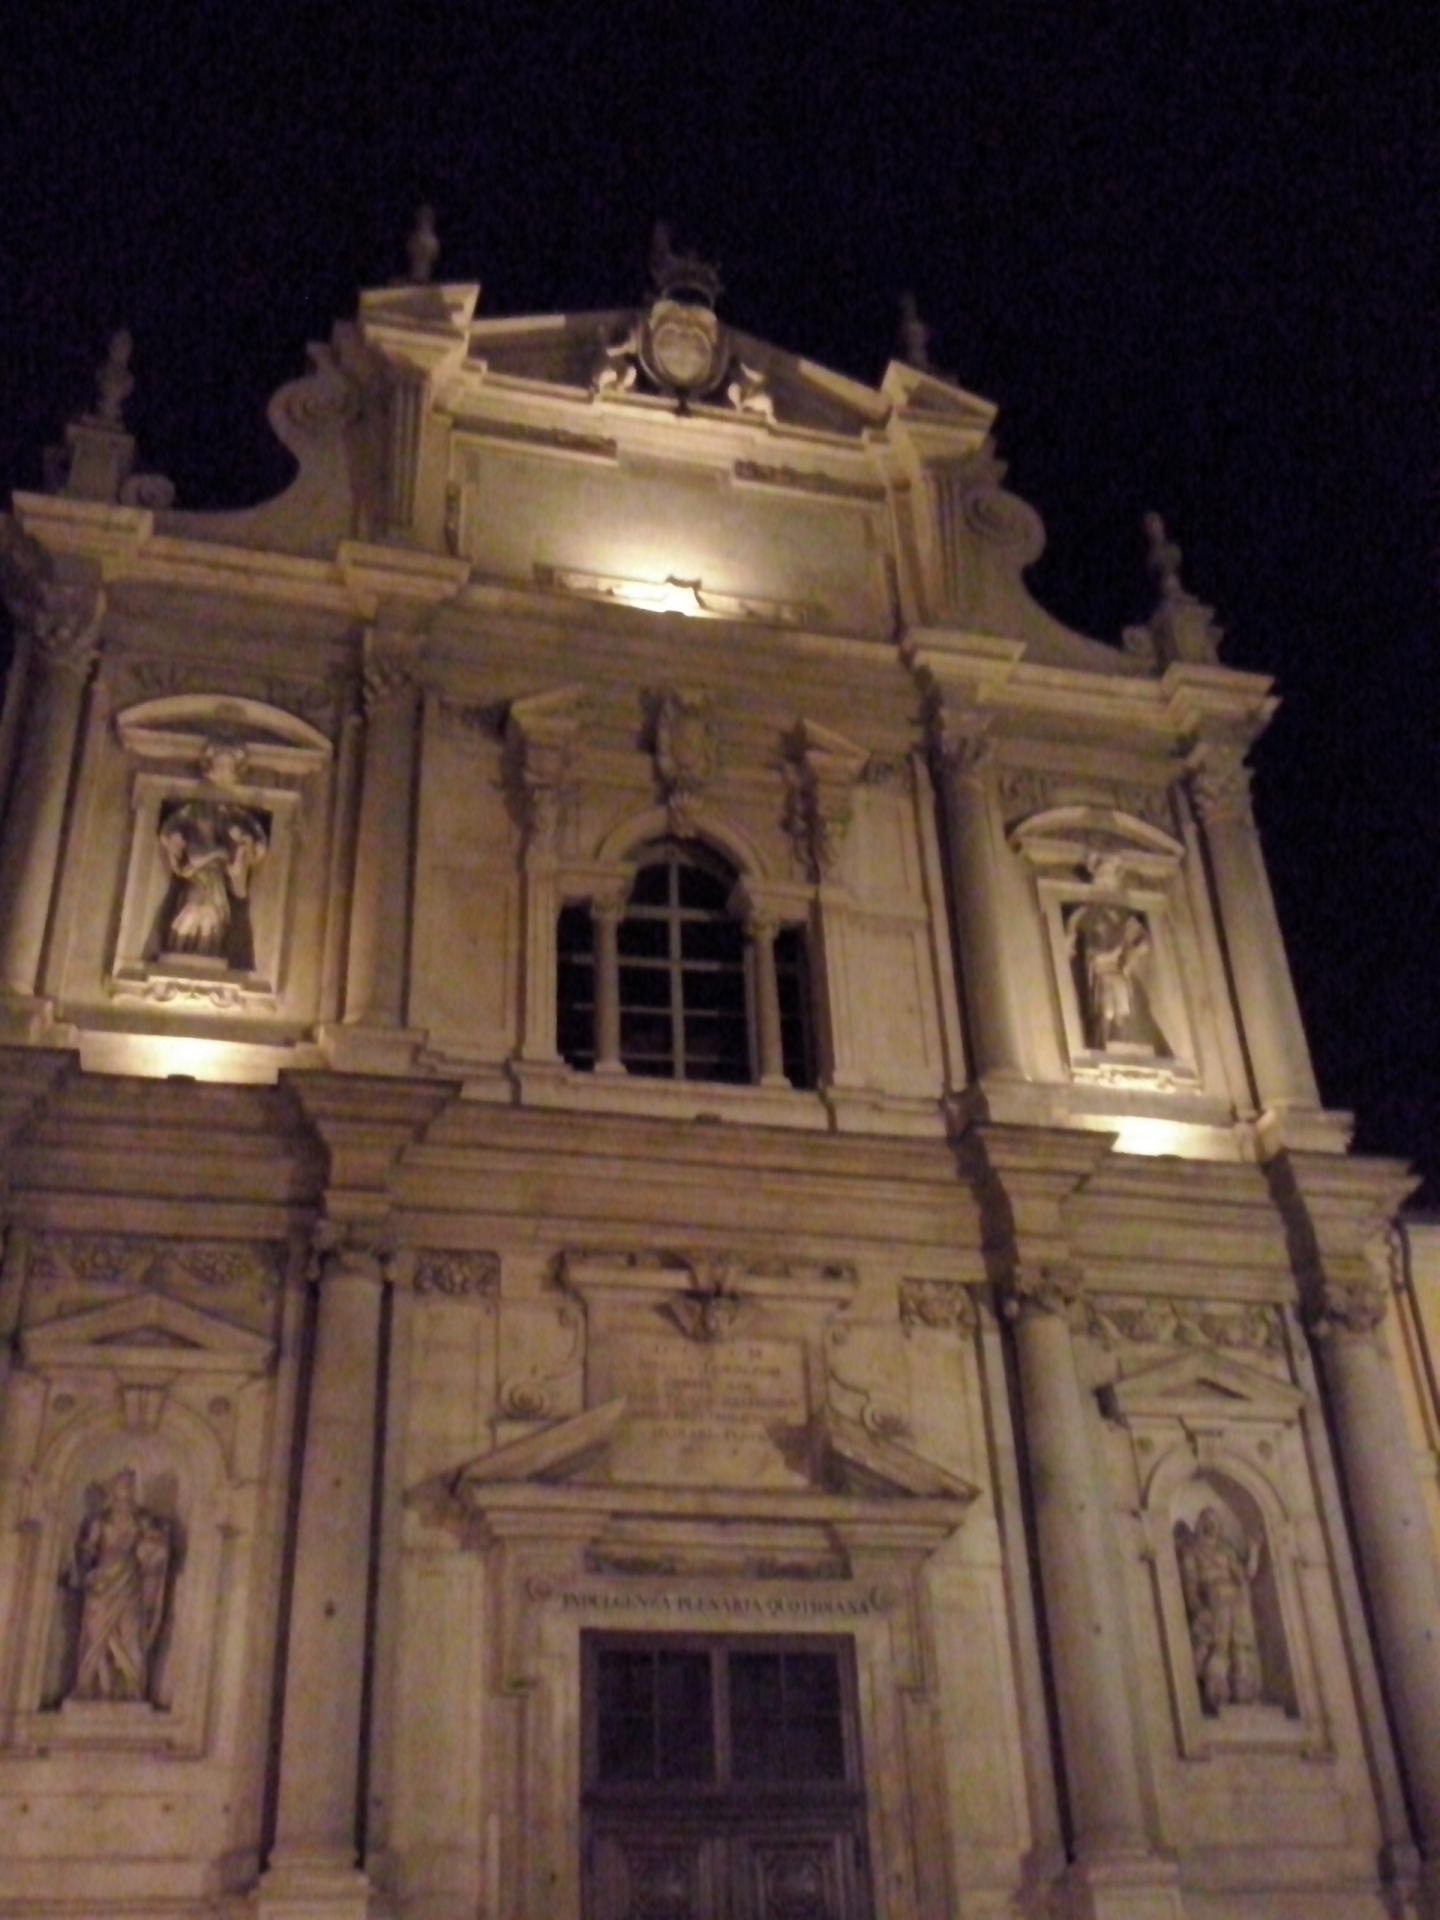 Turin by night